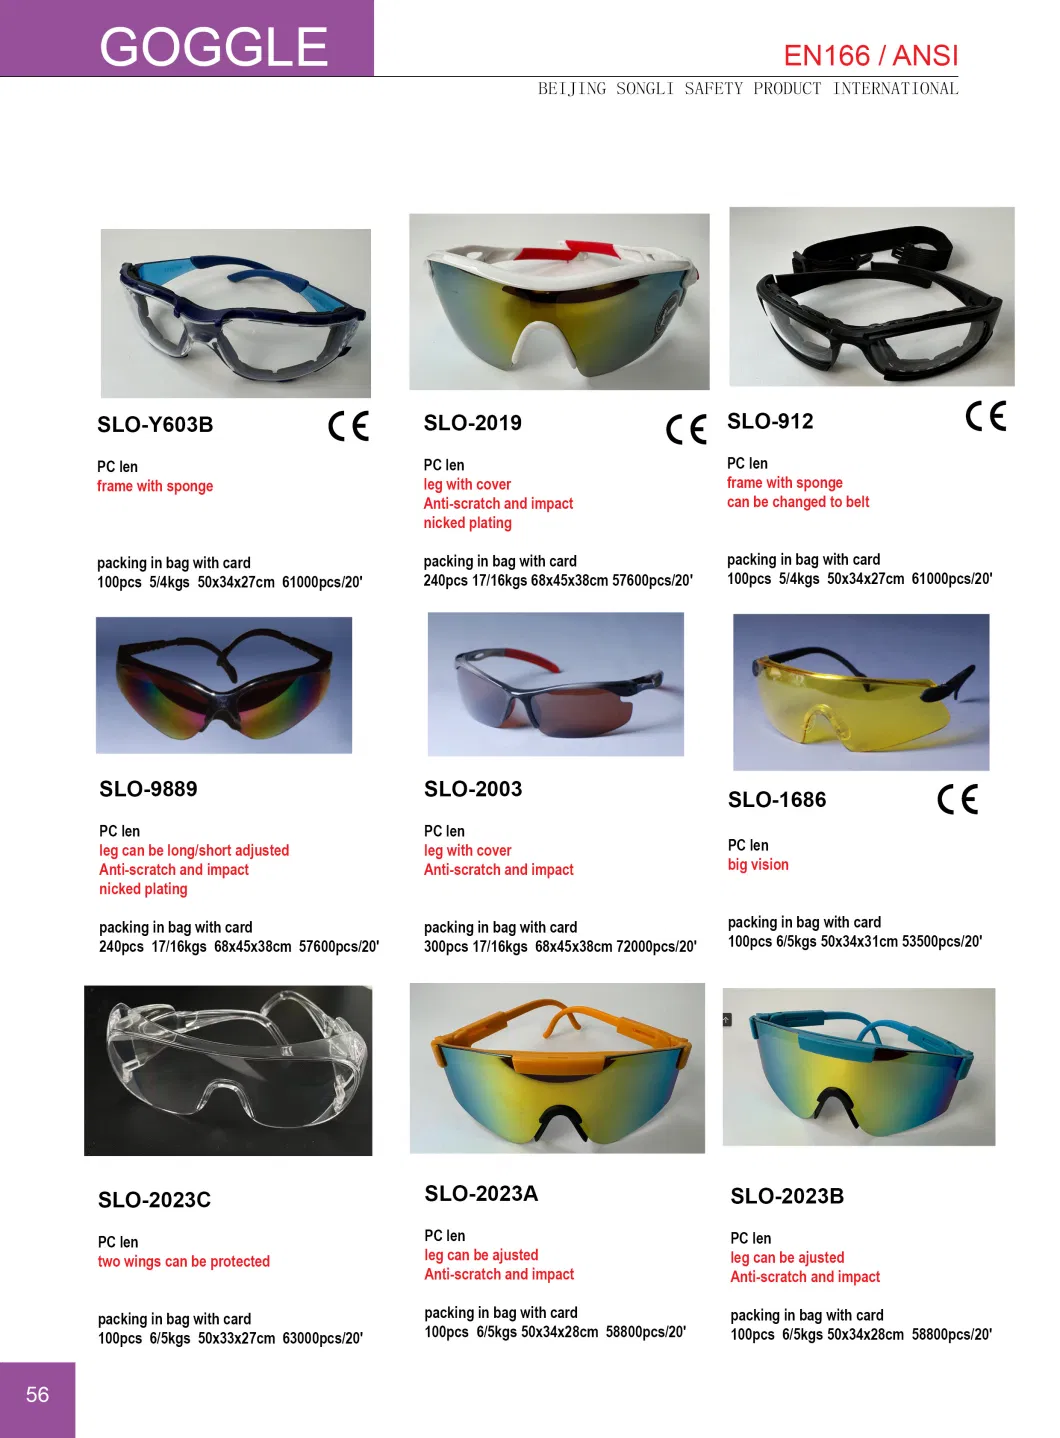 Slo-A8007 Auto Darken Welding Safety Protective Eye Wear Glasses Eye Protection